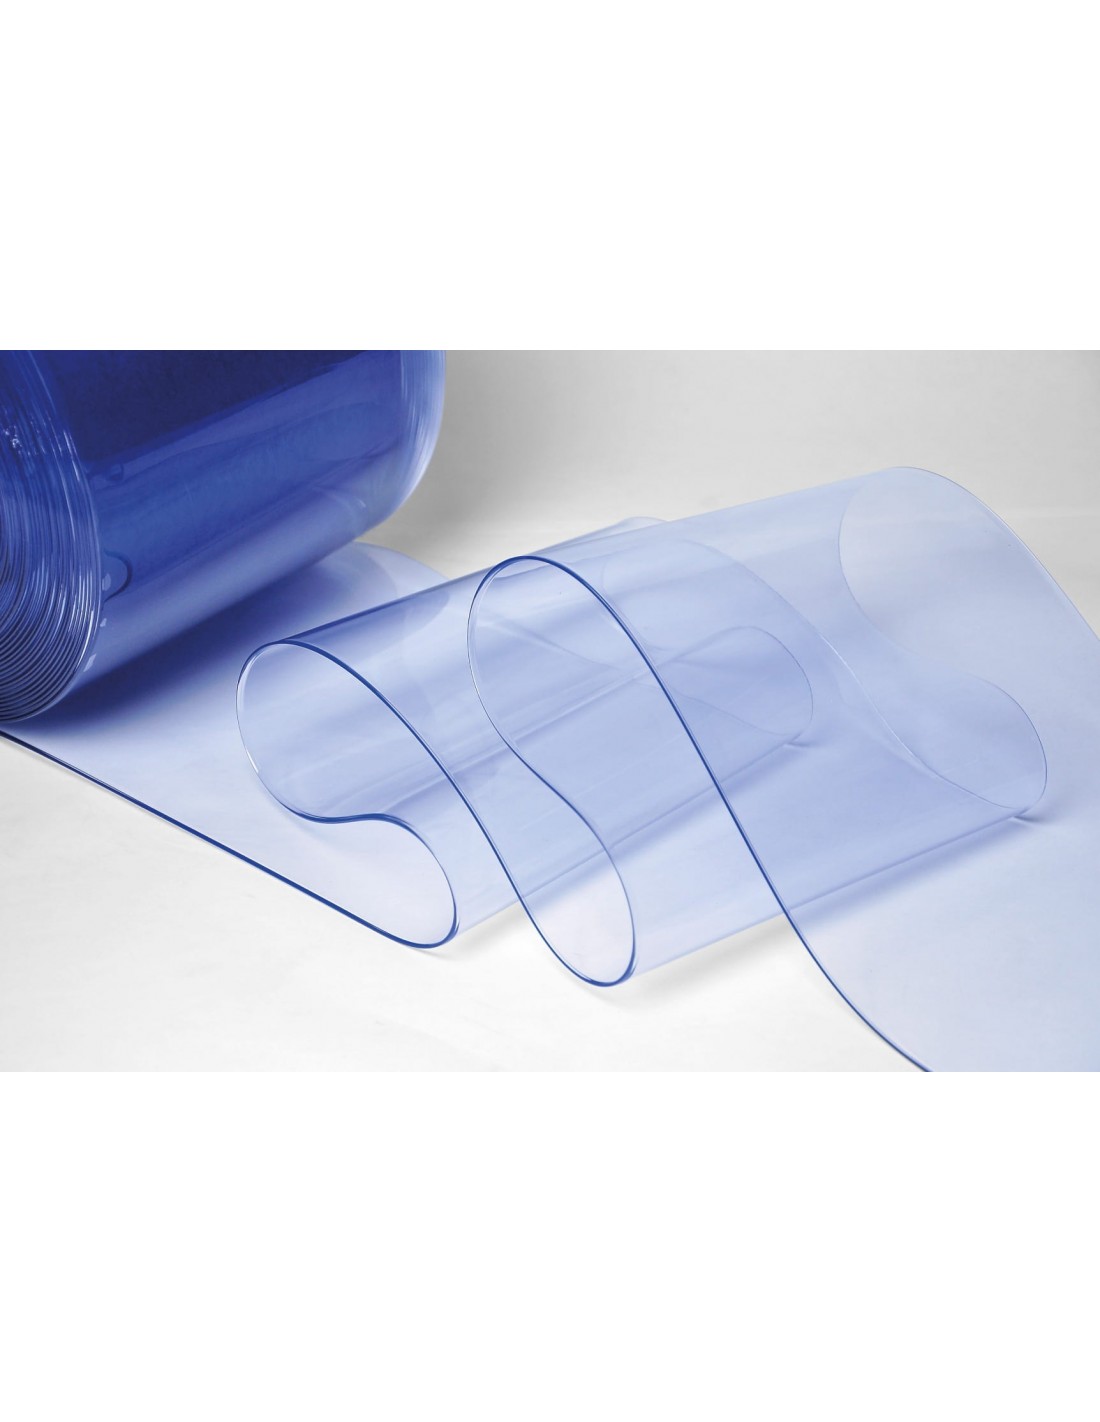 Lamas de PVC Flexible transparentes para cortinas - Resopal